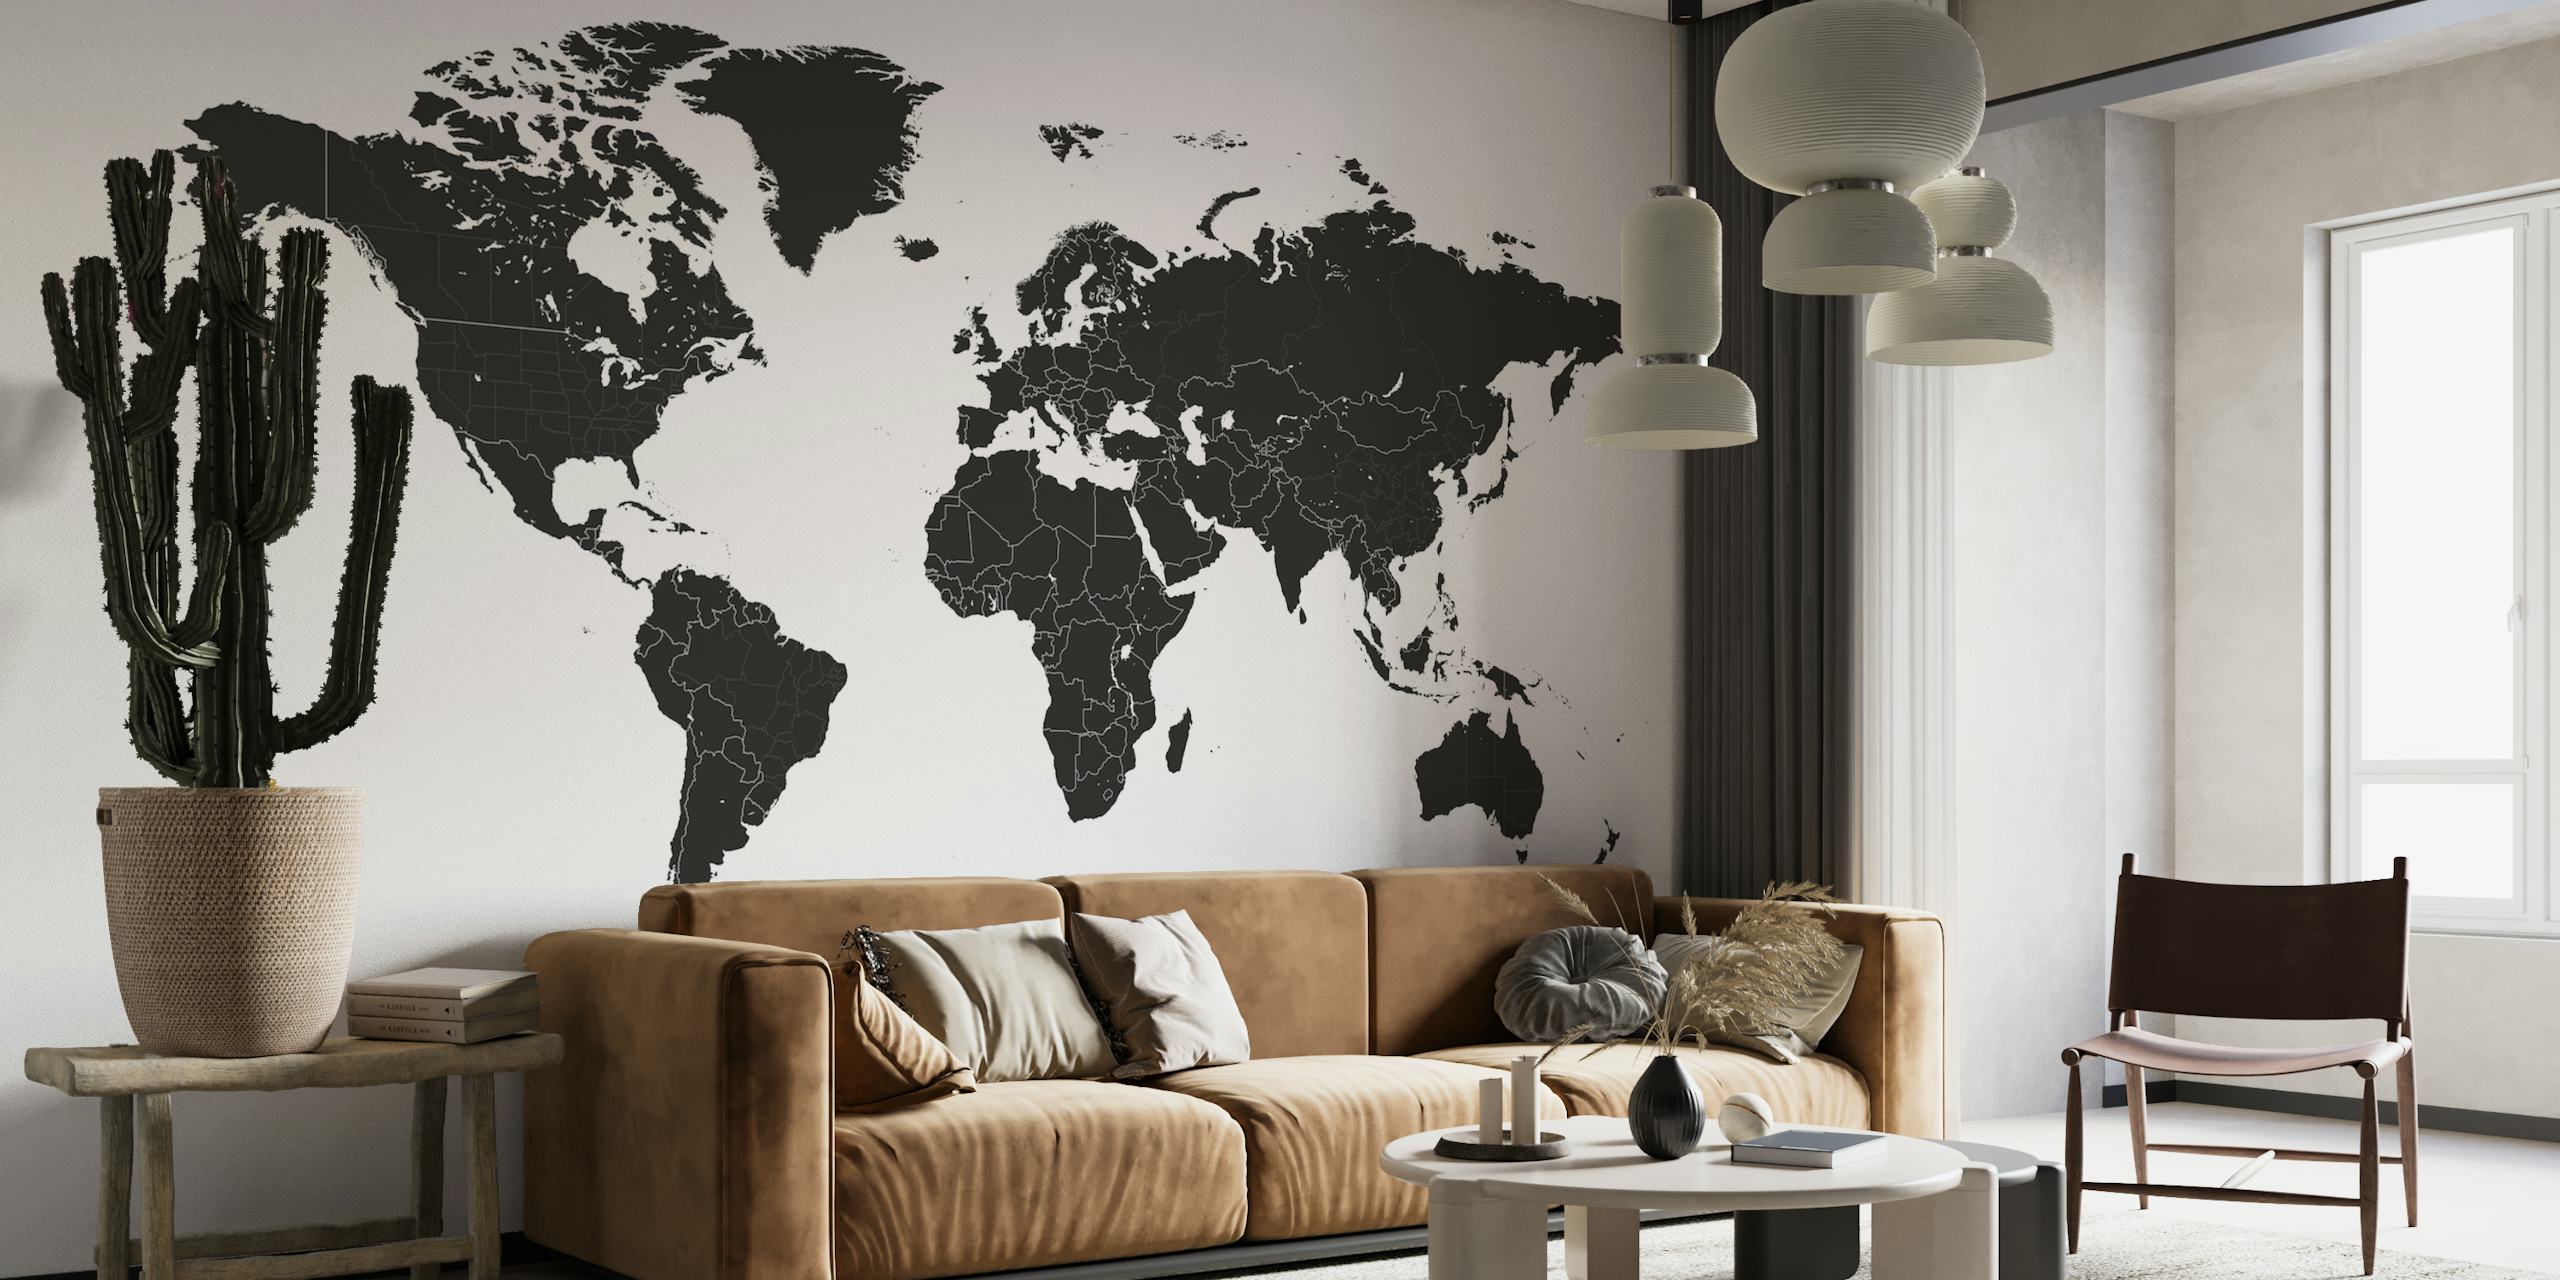 Black World Map papel pintado